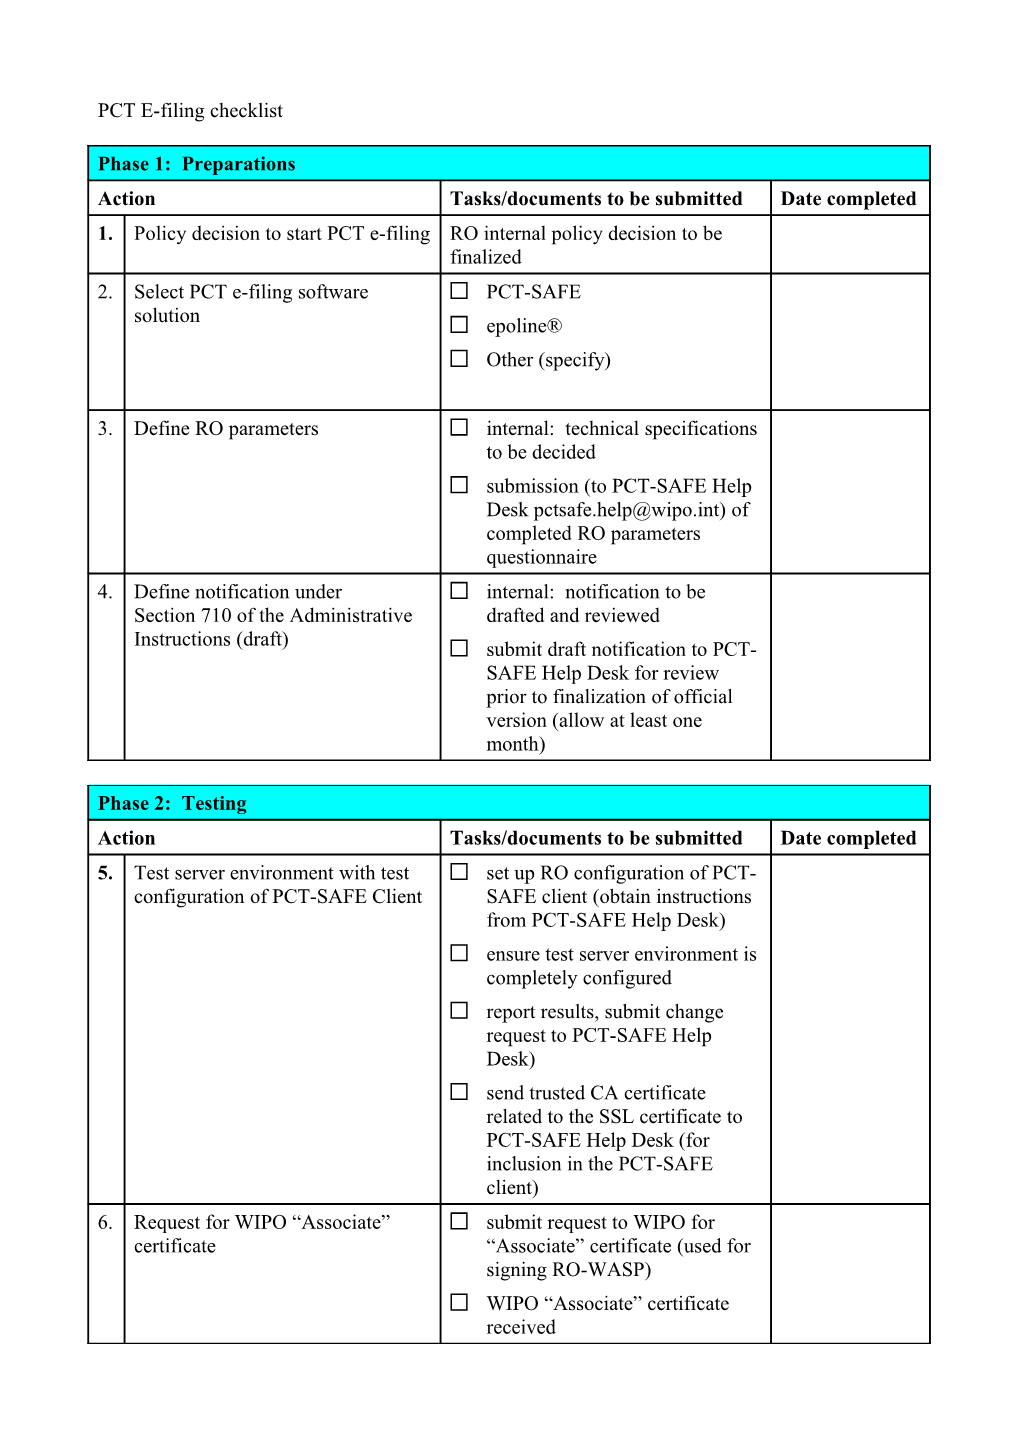 PCT E-Filing Acceptance Activities Checklist